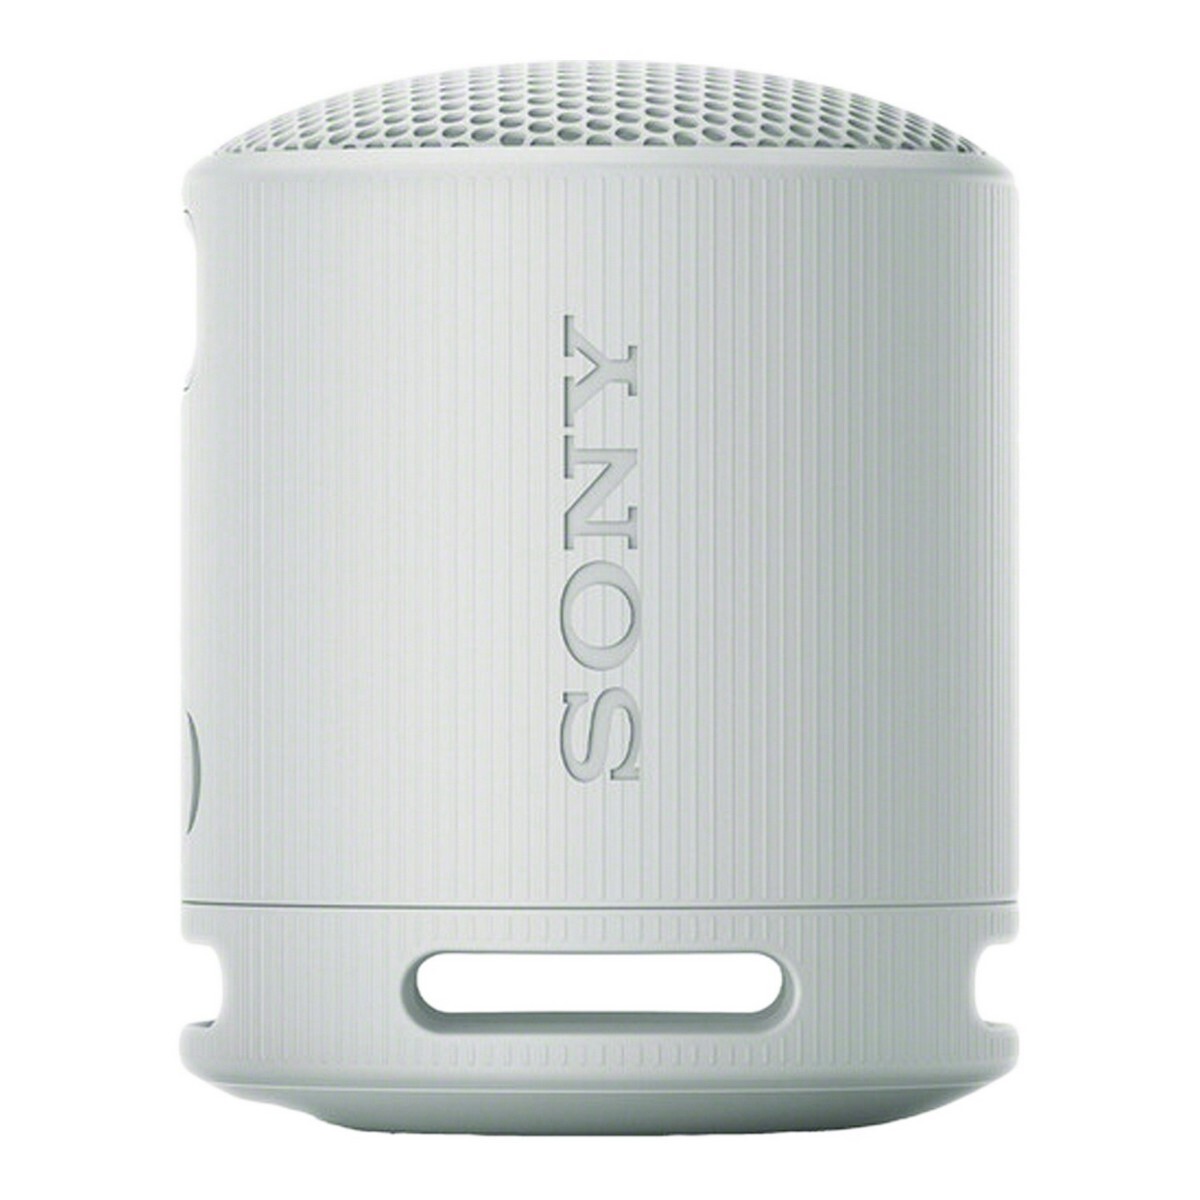 Sony SRS-XB100 Portable Bluetooth Speaker White